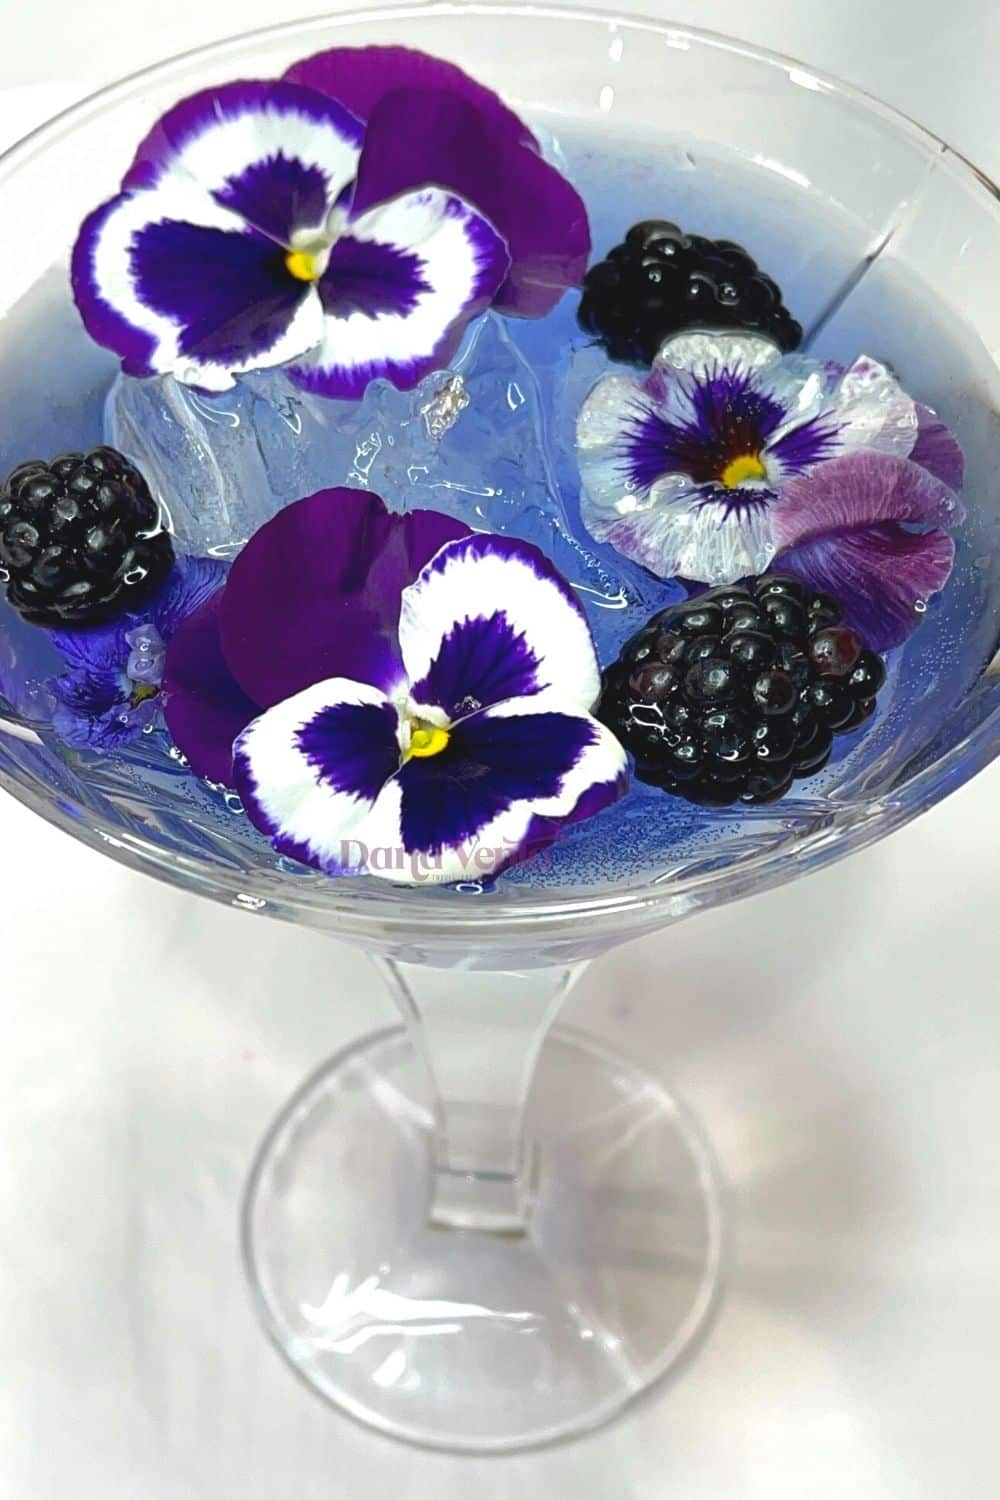 Gin Purple Drink With Blackberries and Pansies